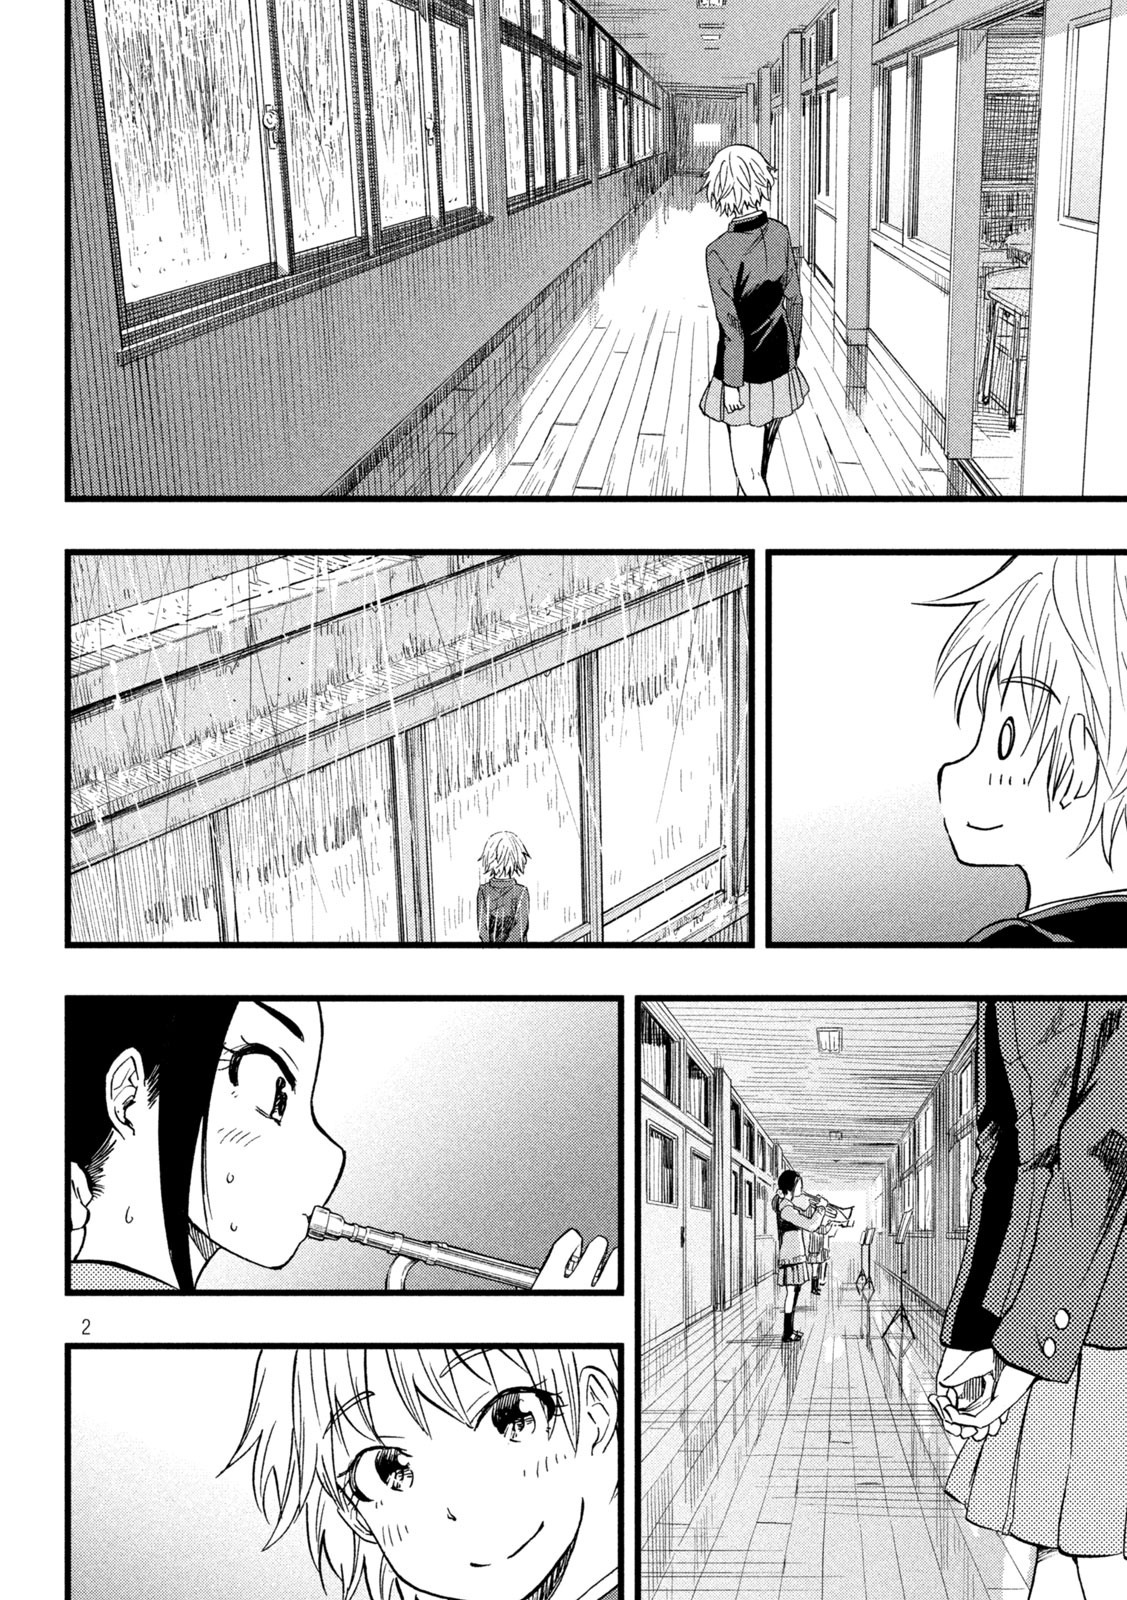 Koharu haru! - Chapter 48 - Page 2